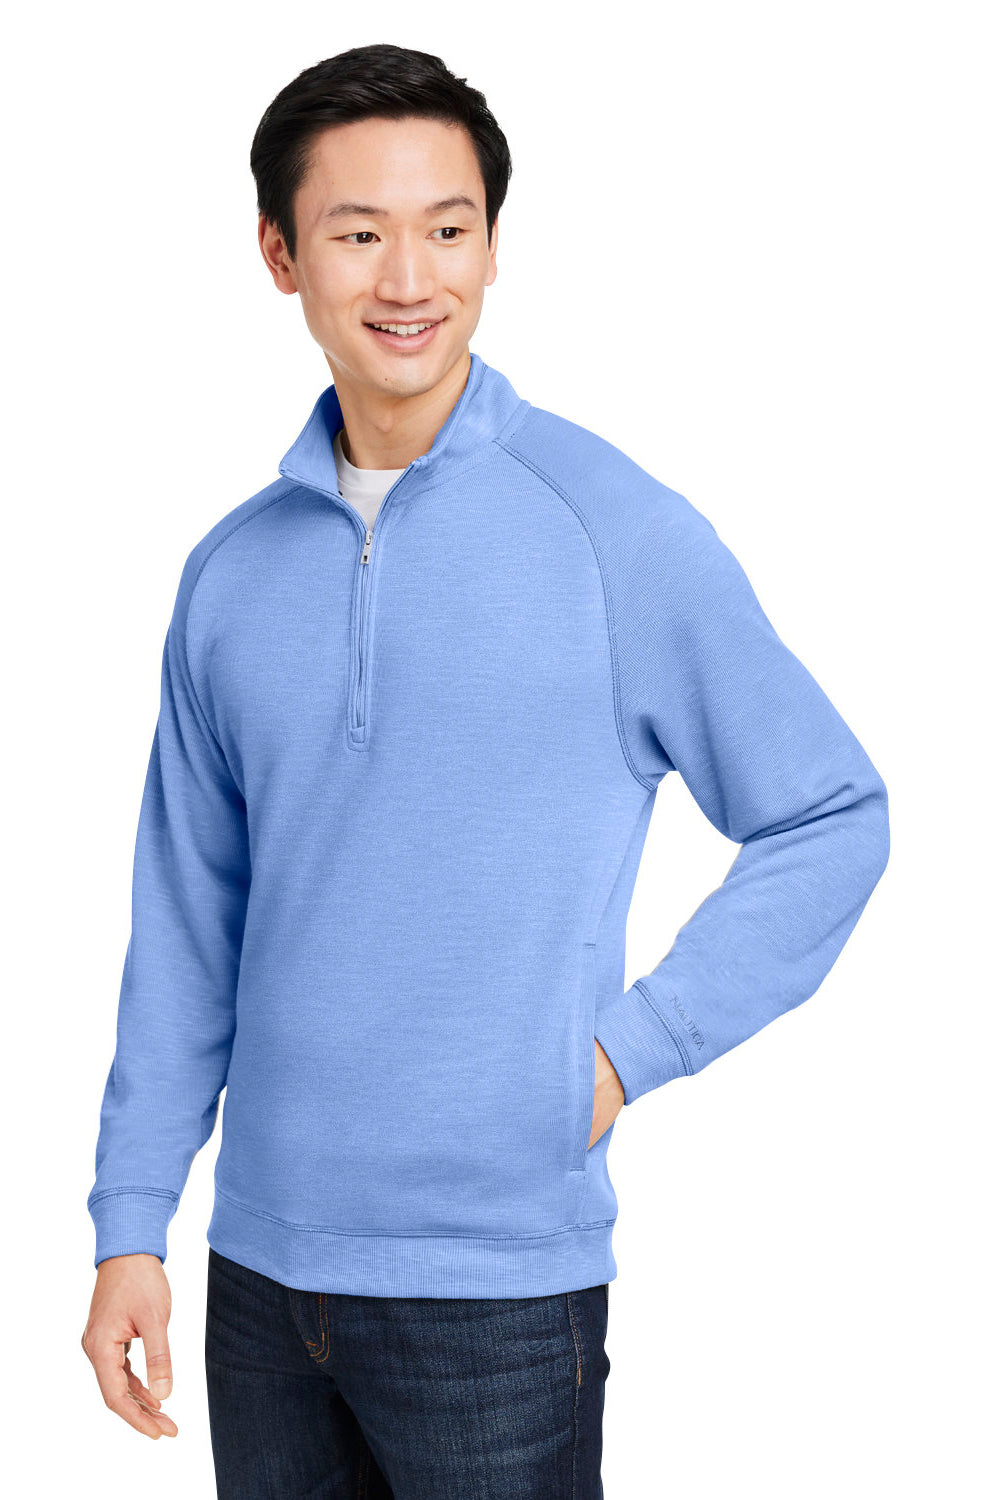 Nautica N17991 Mens Sun Surfer Supreme 1/4 Zip Sweatshirt Vintage Mavi Blue 3Q